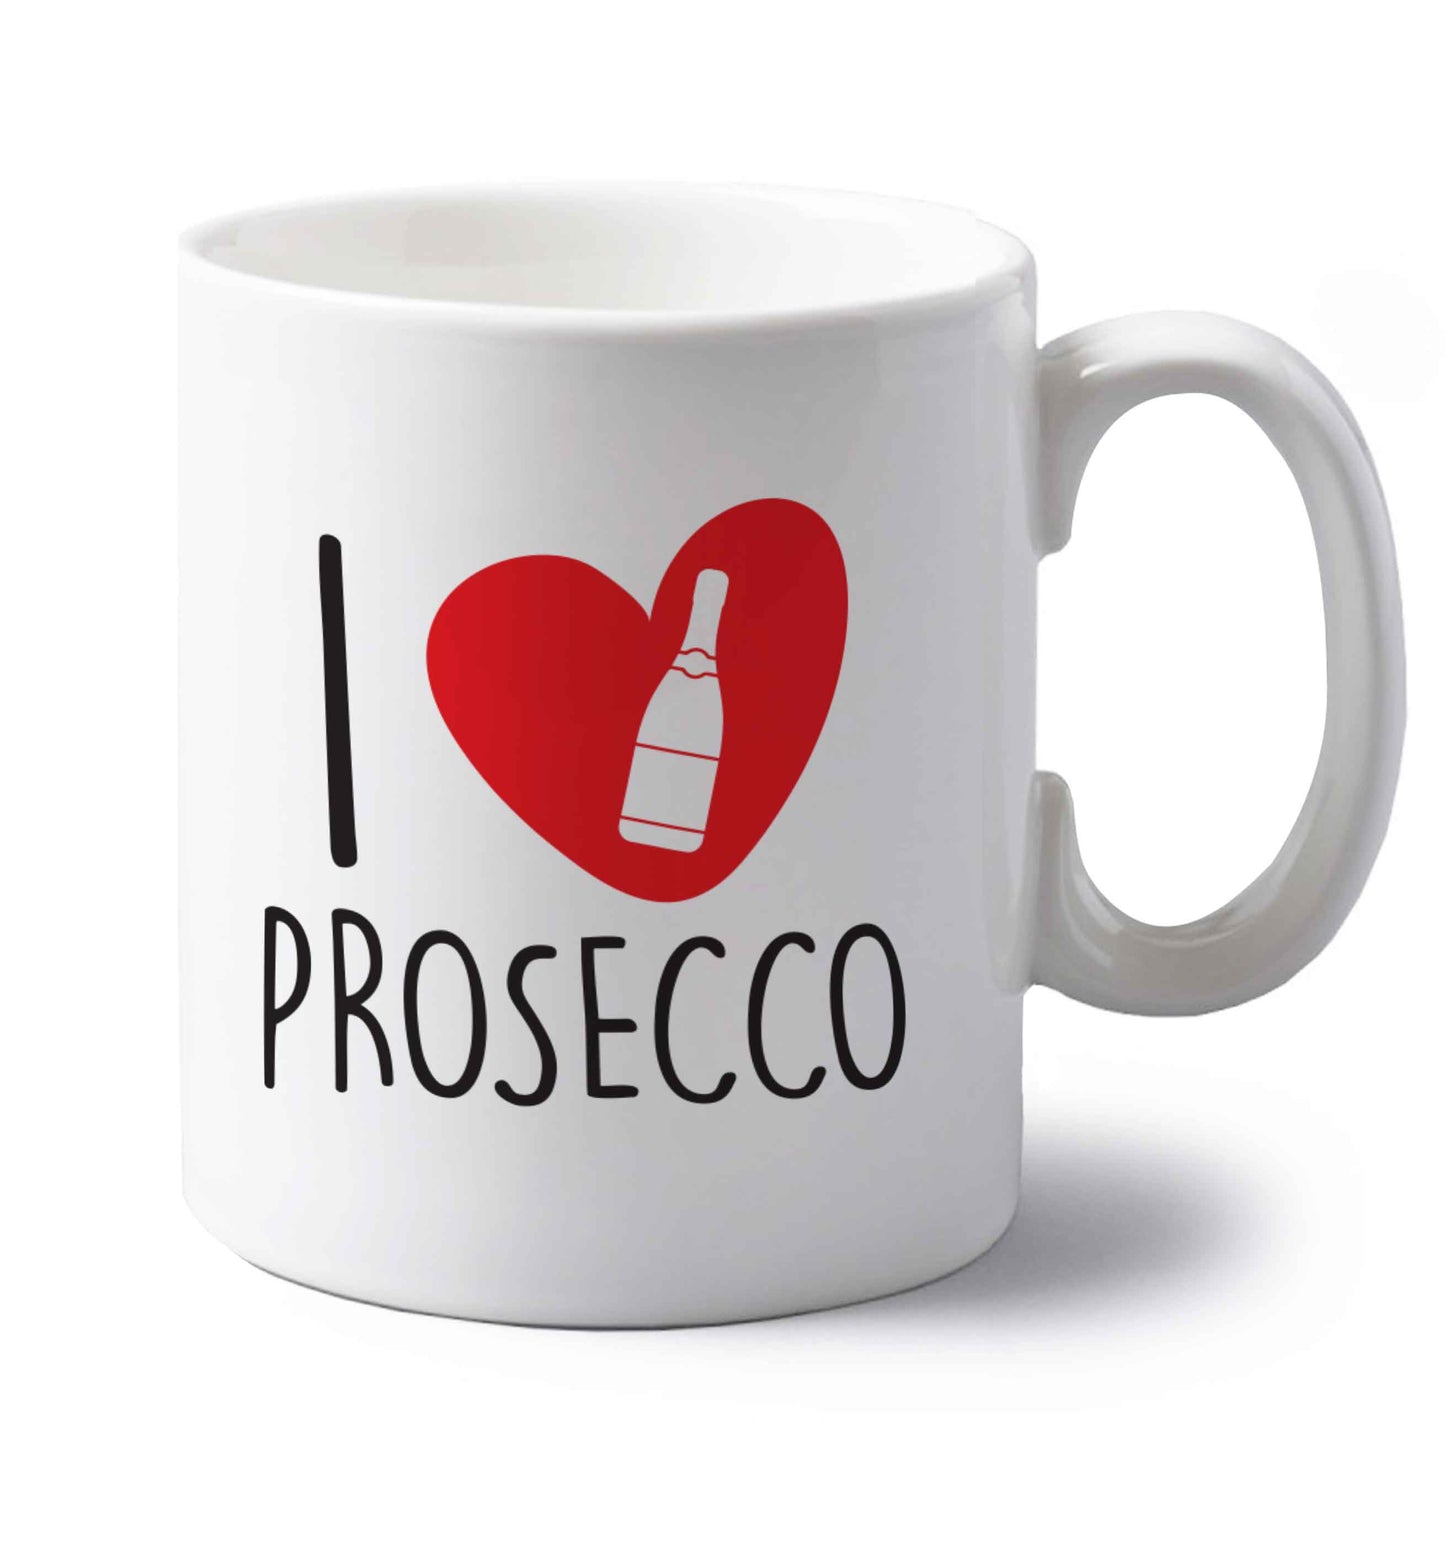 I love prosecco left handed white ceramic mug 